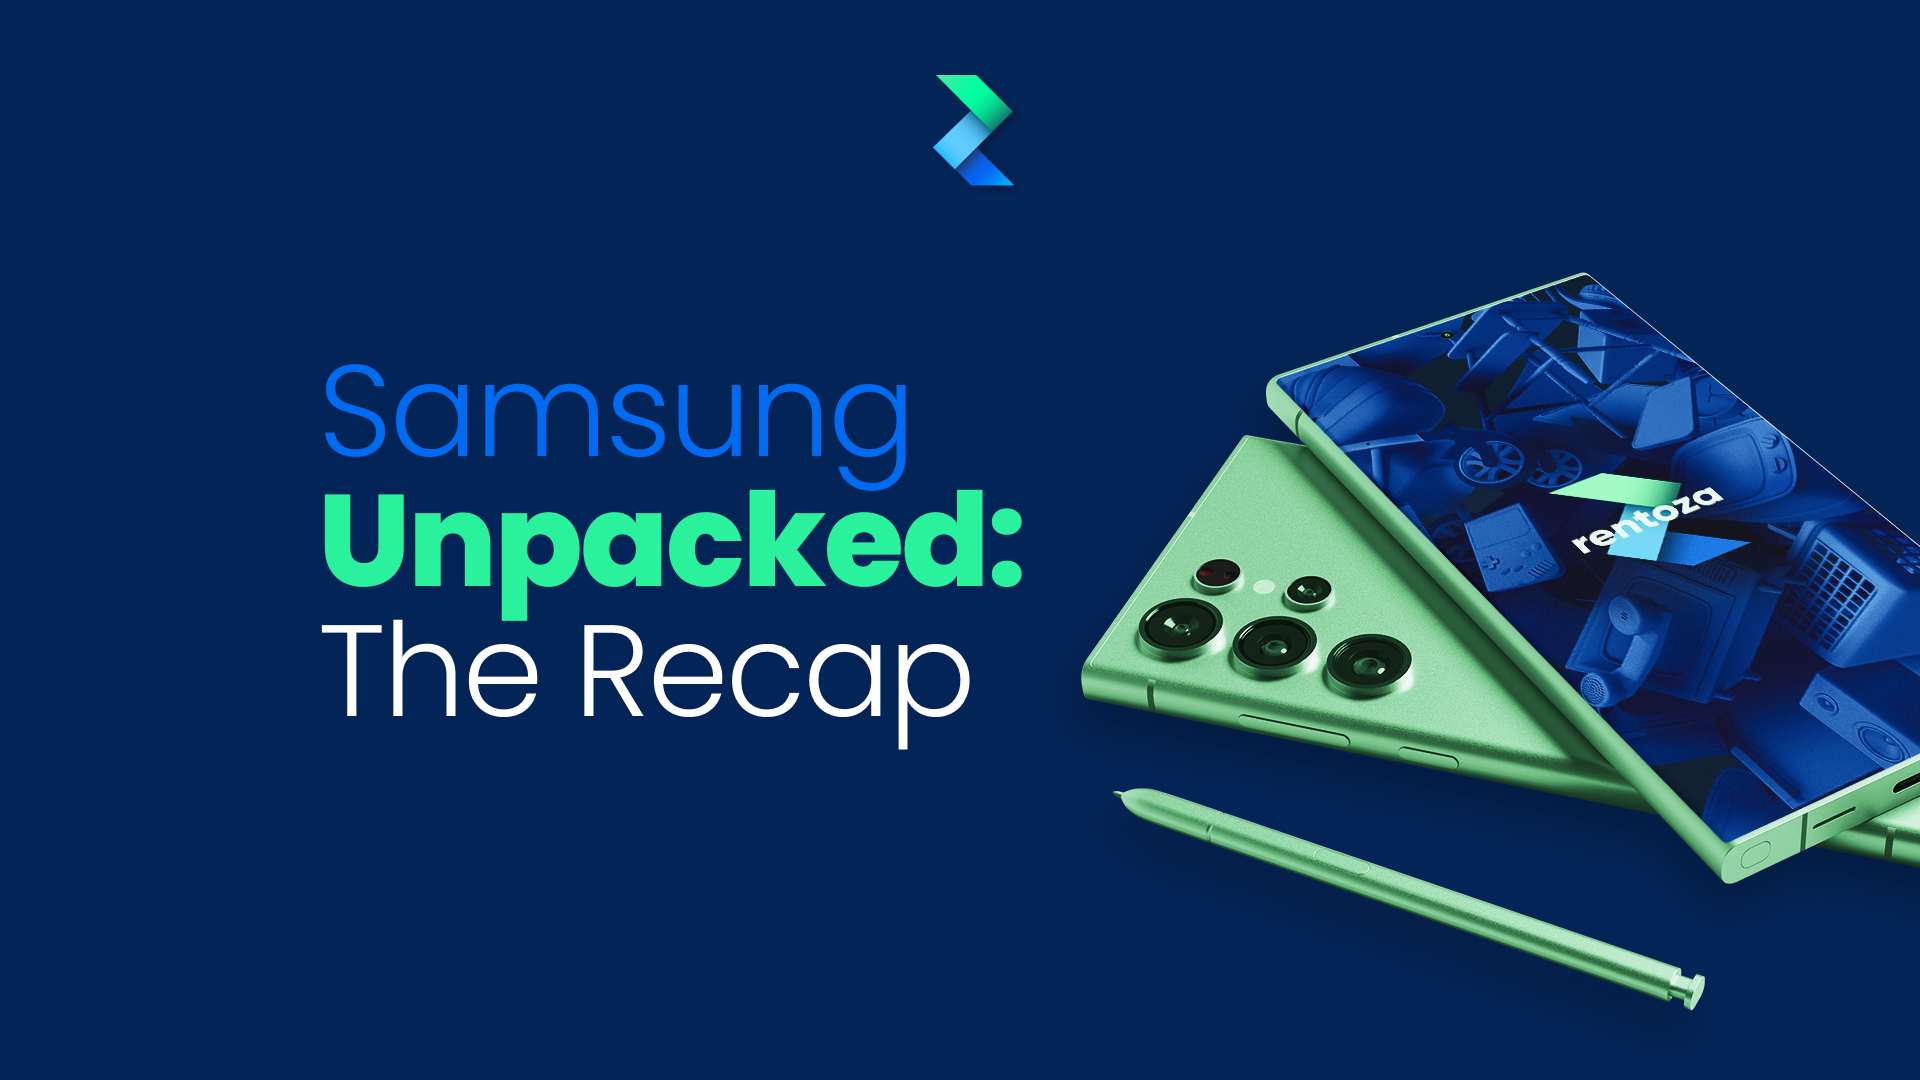 Samsung Unpacked: The Recap